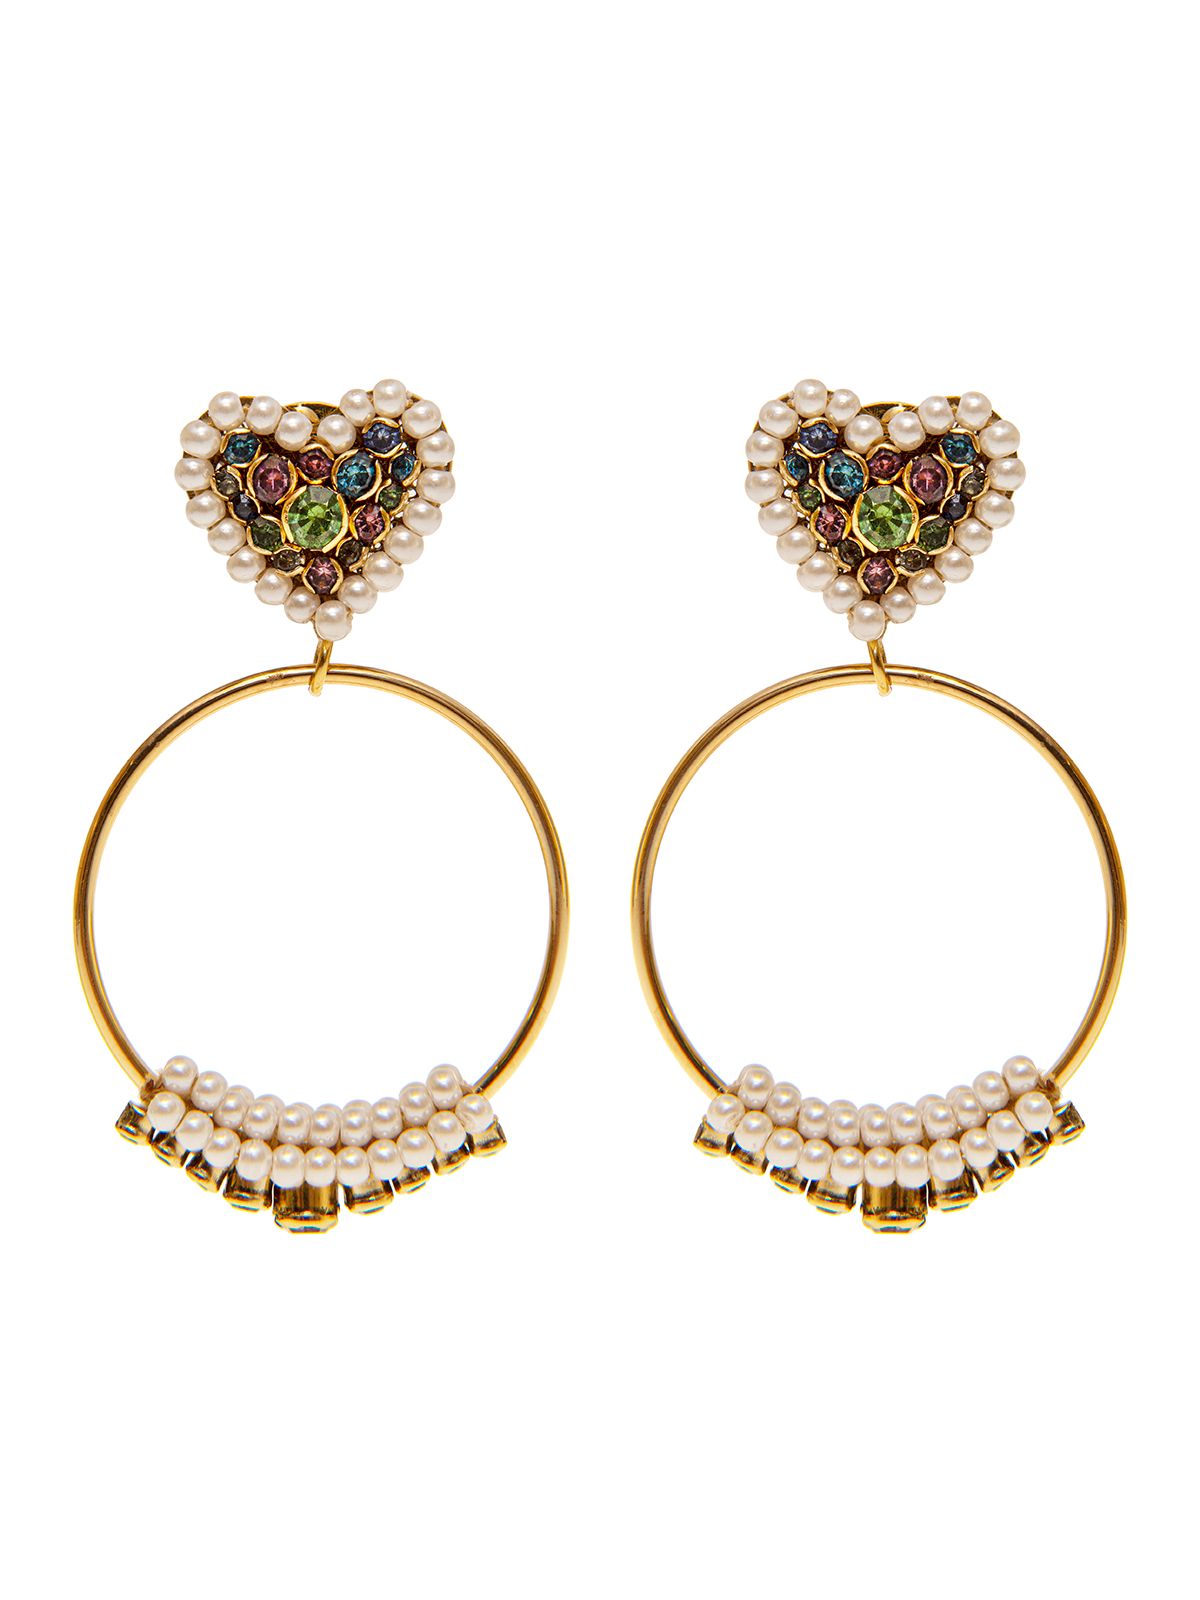 Multicolor heart earrings embellished with beaded hoops